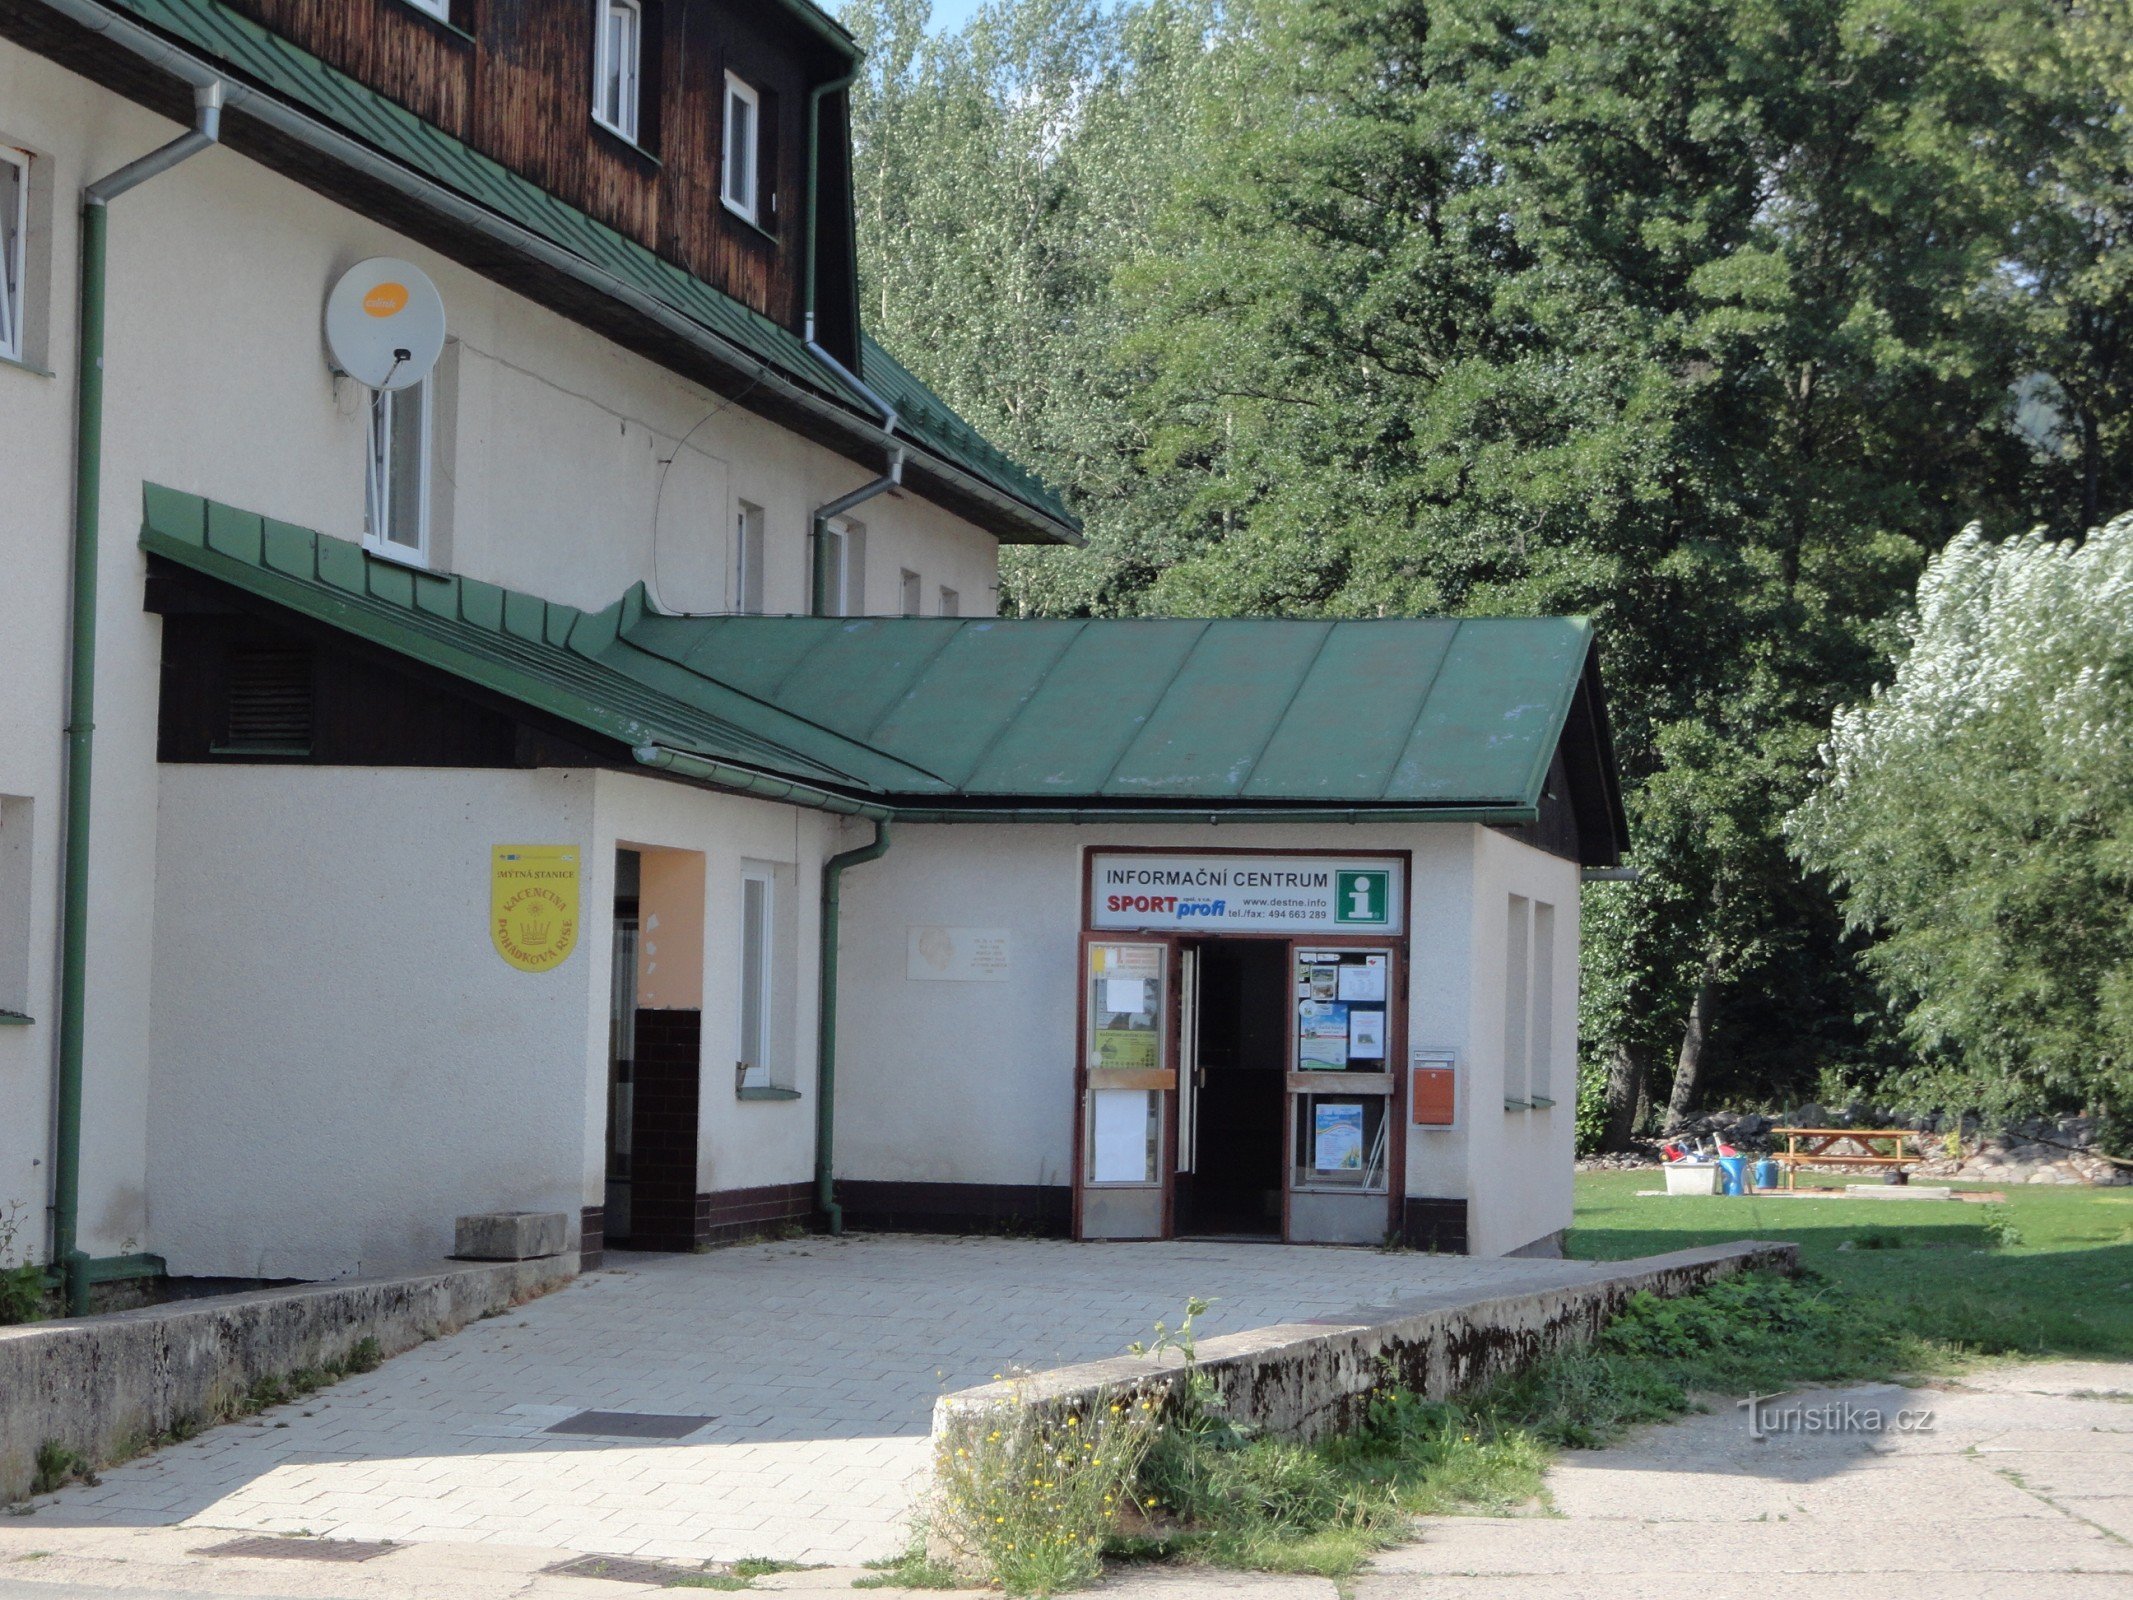 Deštné - information center